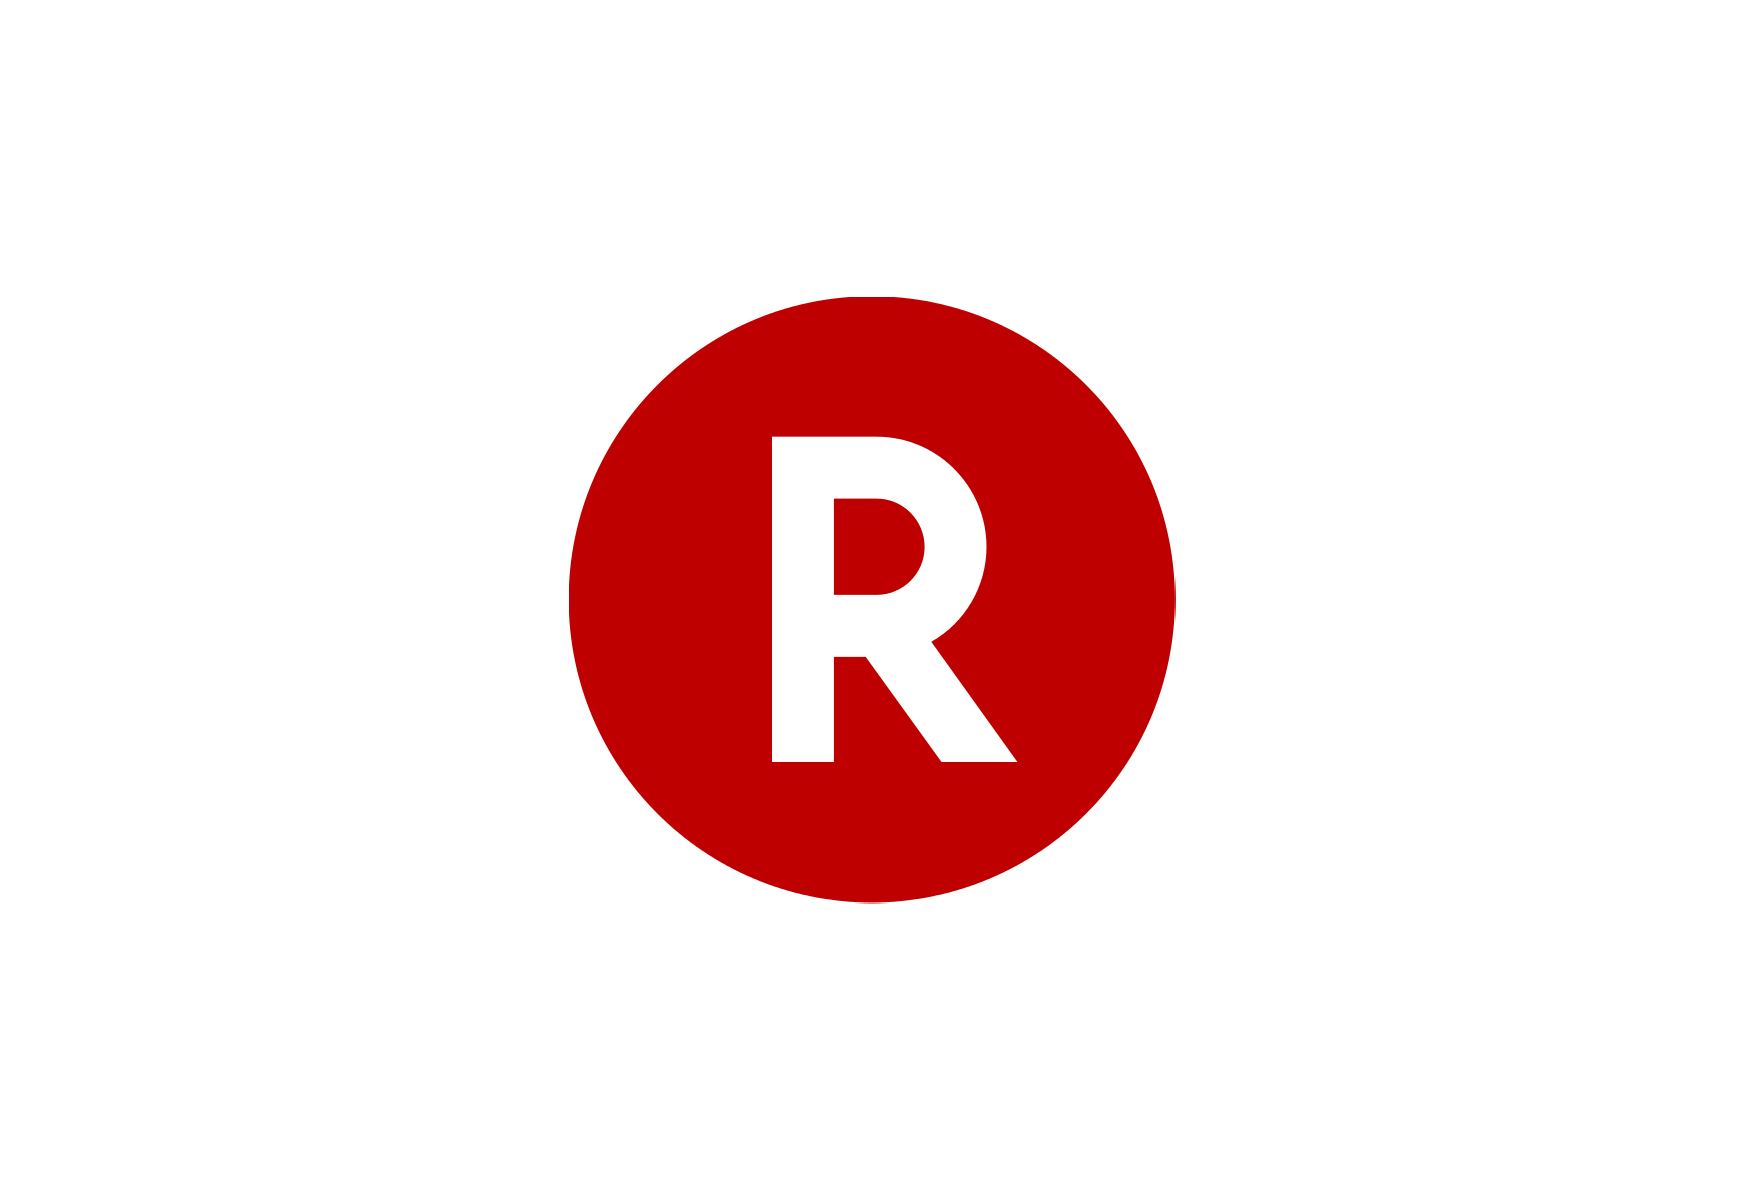 Rakuten_logo_01.png